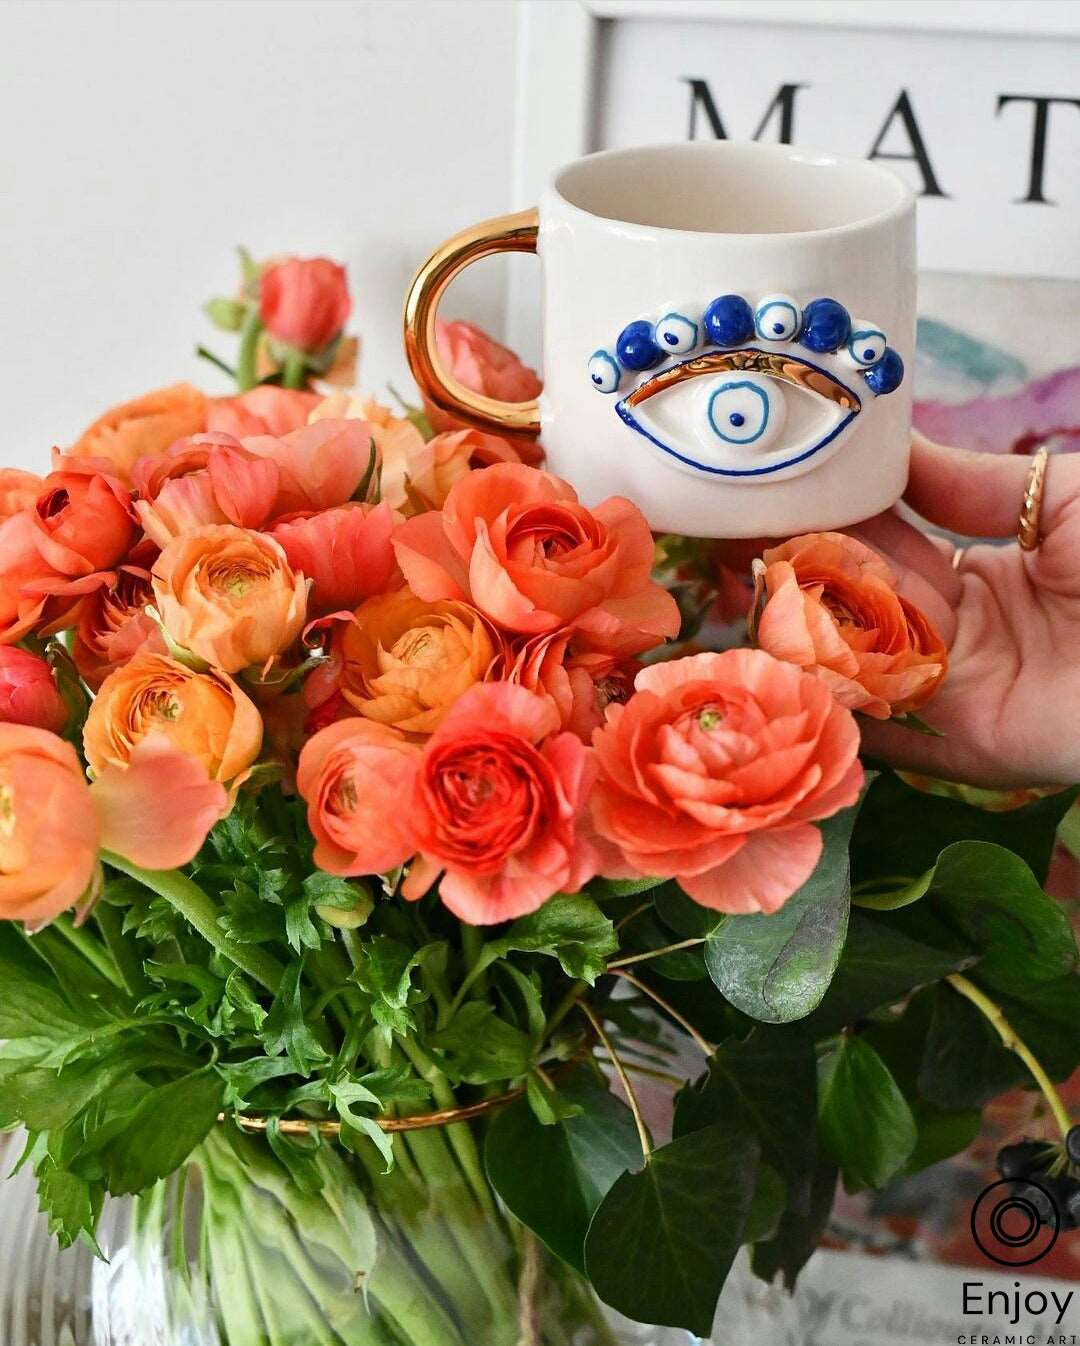 Evil Eye Coffee Mug - Artisanal, Handmade 10oz Ceramic Coffee Cup with Gold Handle, Evil Eye Protection Symbol